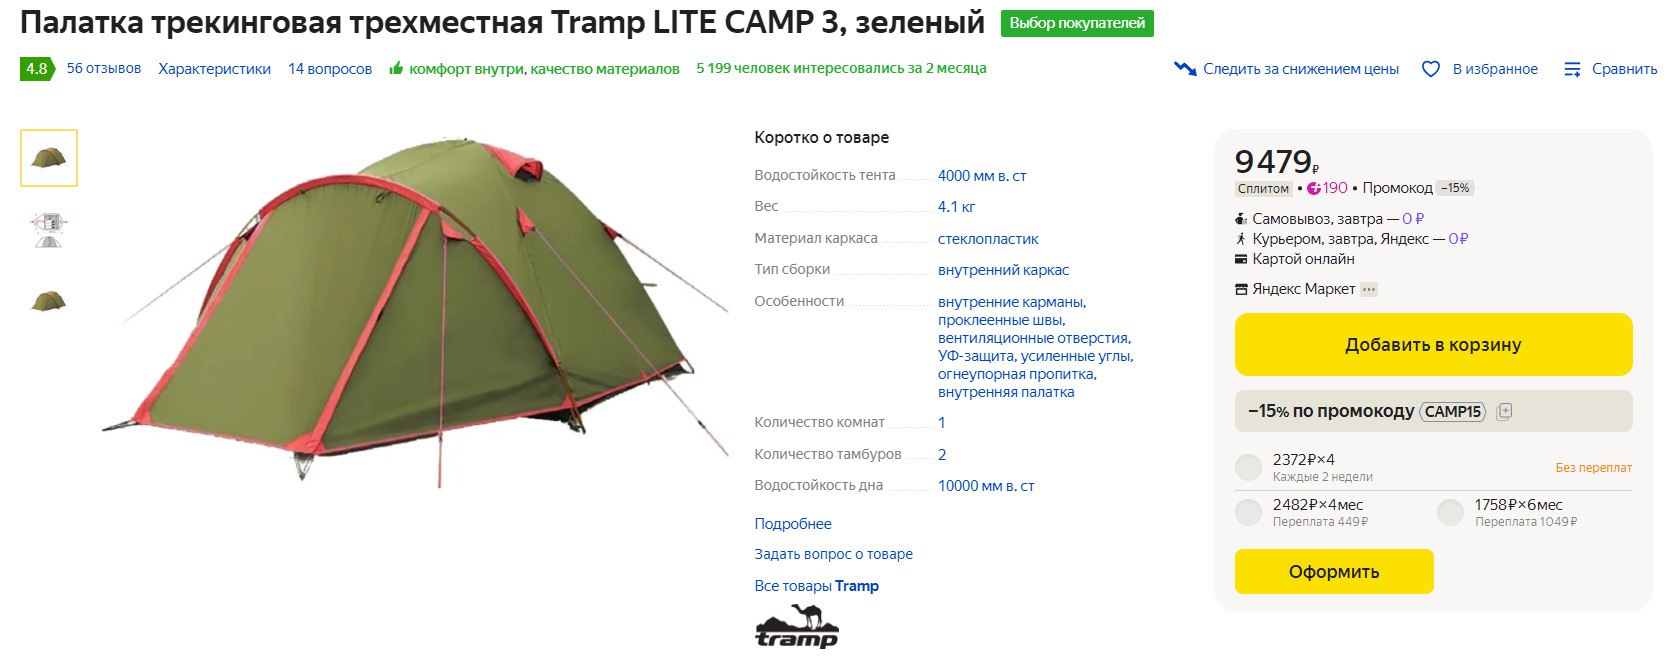 Палатка Tramp Camp 3. Tramp Lite палатка Camp 3. Палатка Tramp Lite Camp 2. Tramp Lite Camp 4. Tramp camp 3